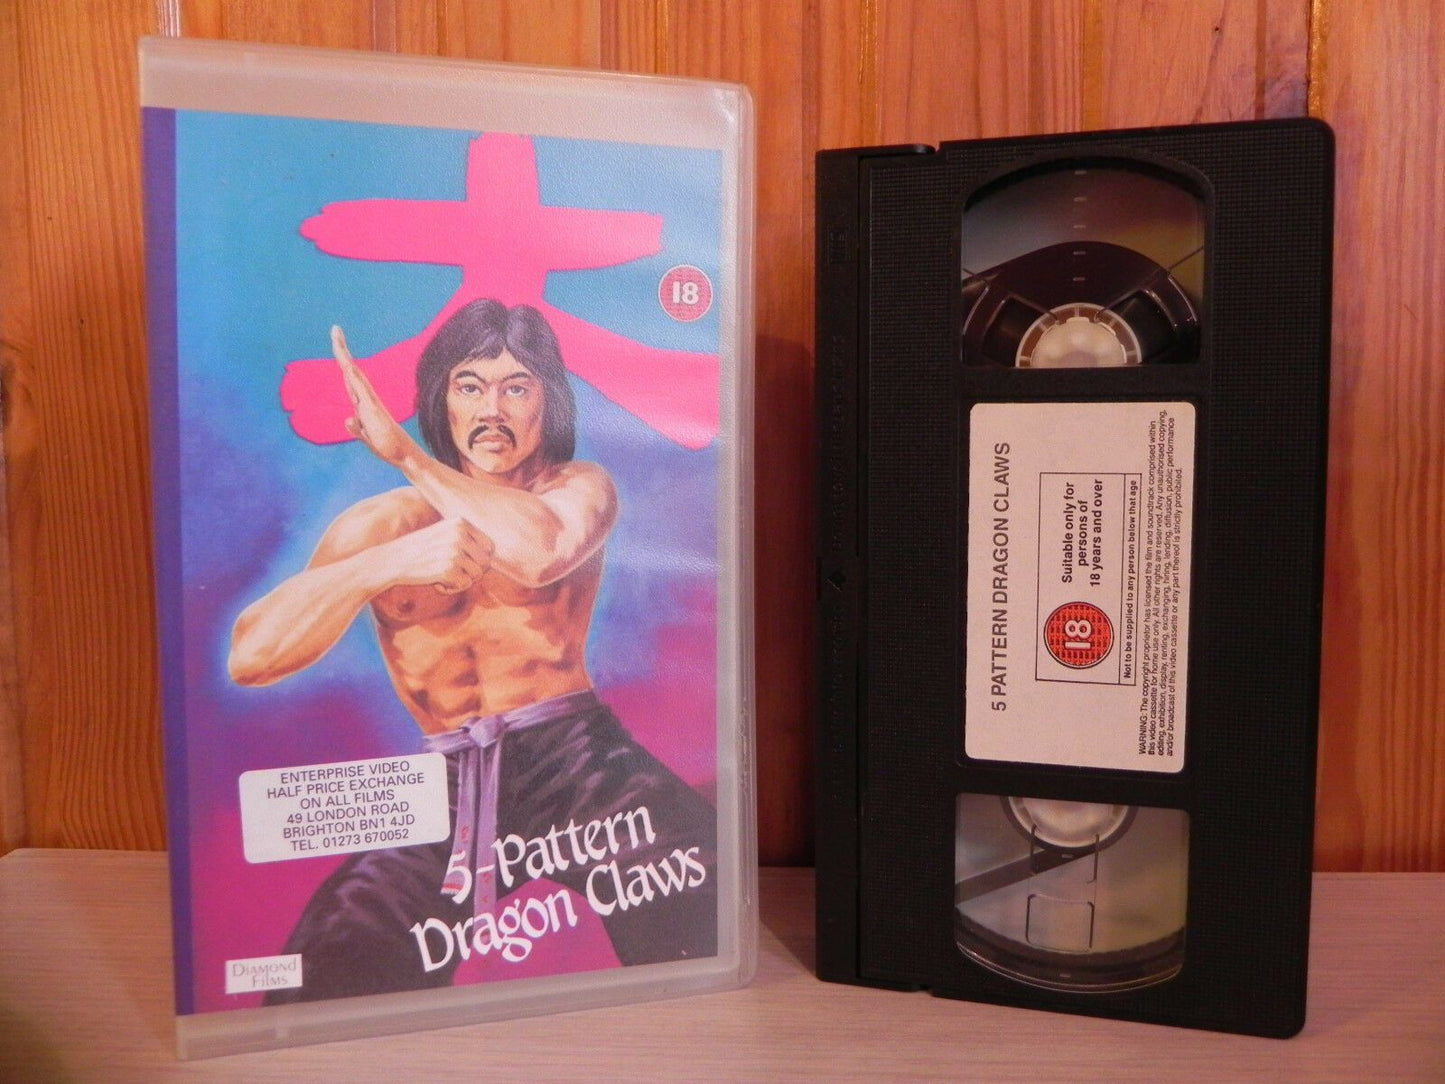 Five-Pattern Dragon Claws - Wong Cheng Li - Dragon Lee - Kitty Chui - VHS Video-